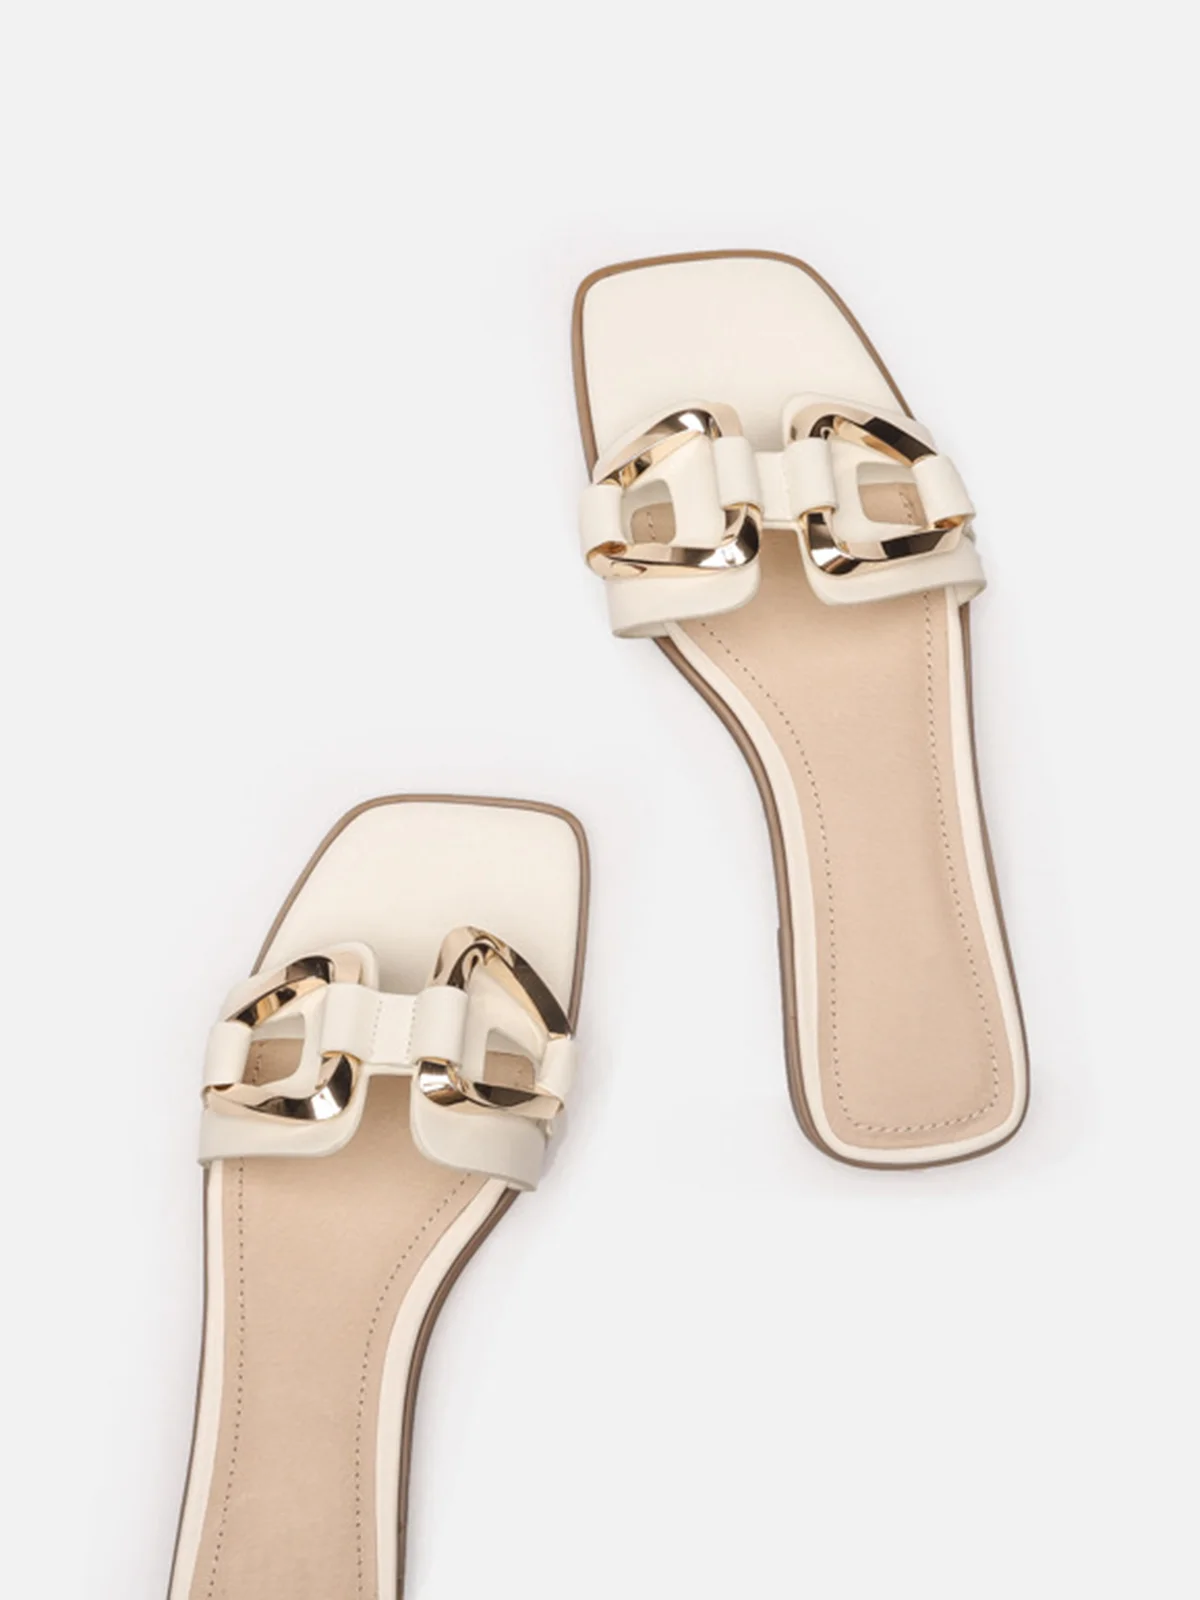 Fashionable Geometric Metal Decor Hollow Out Slide Sandals